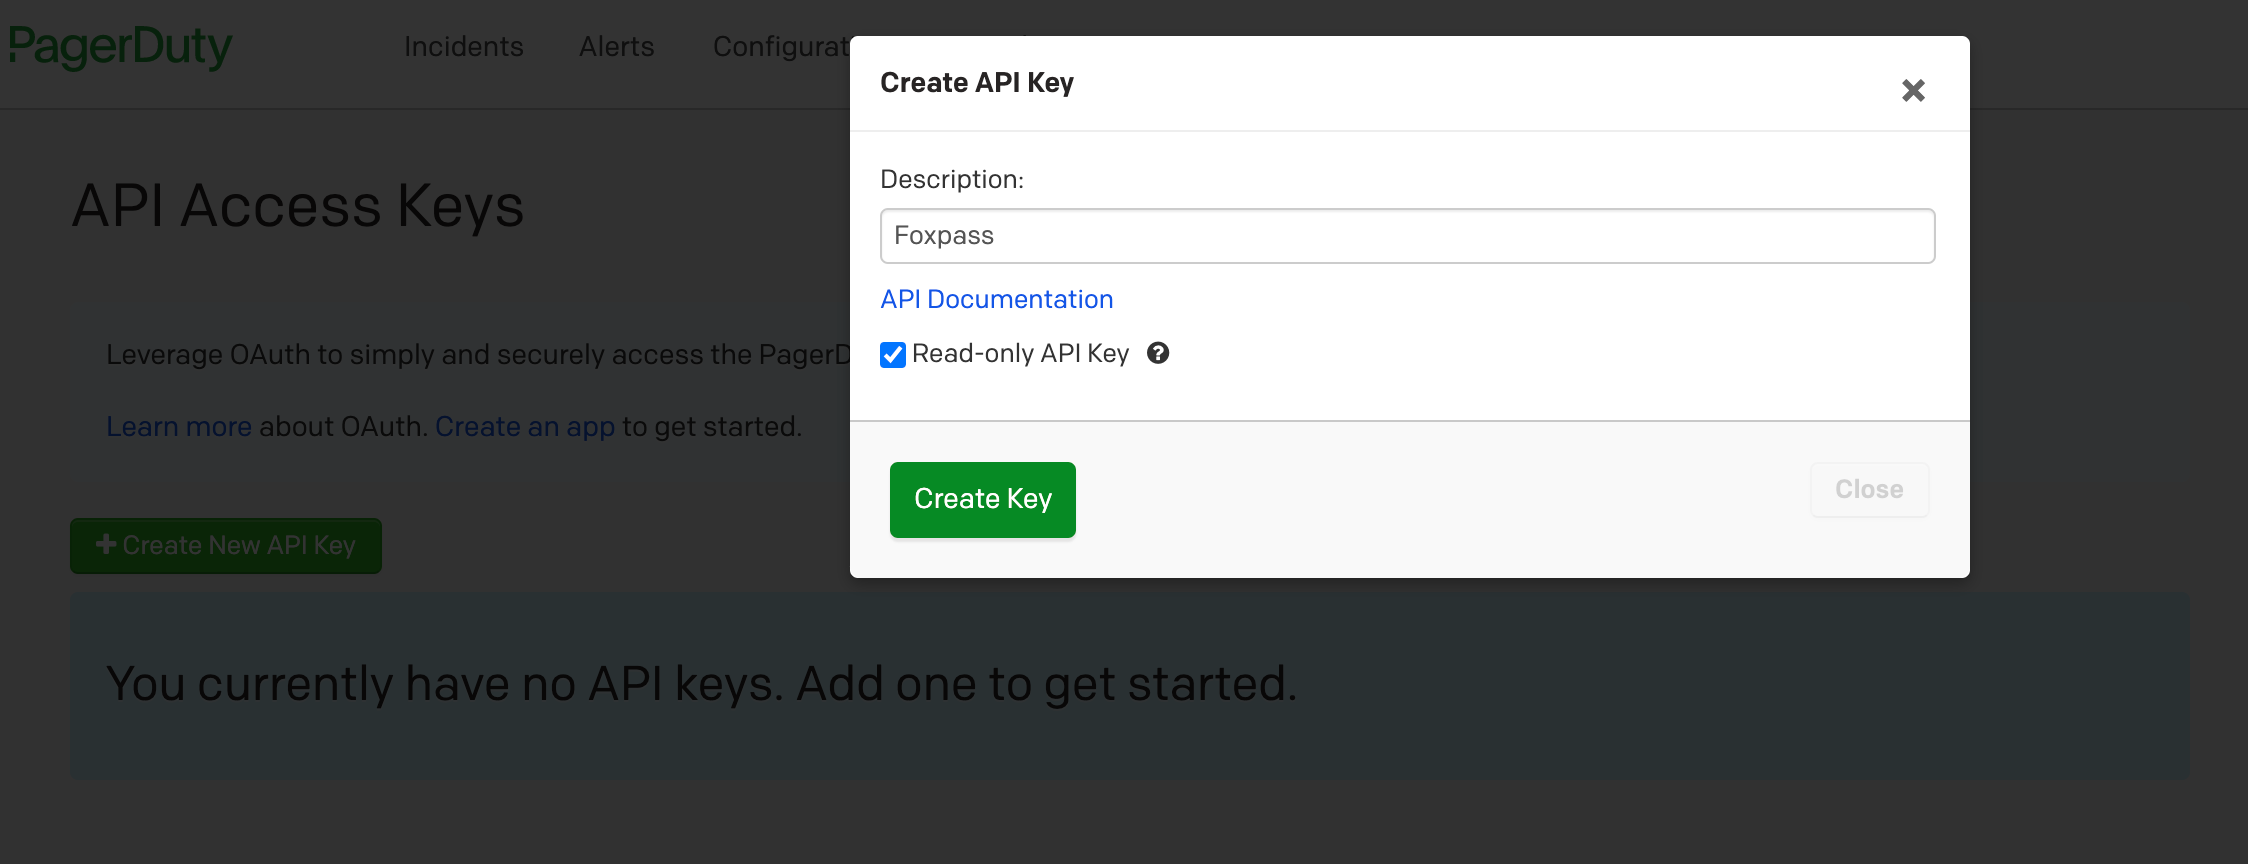 Create an API key for Foxpass